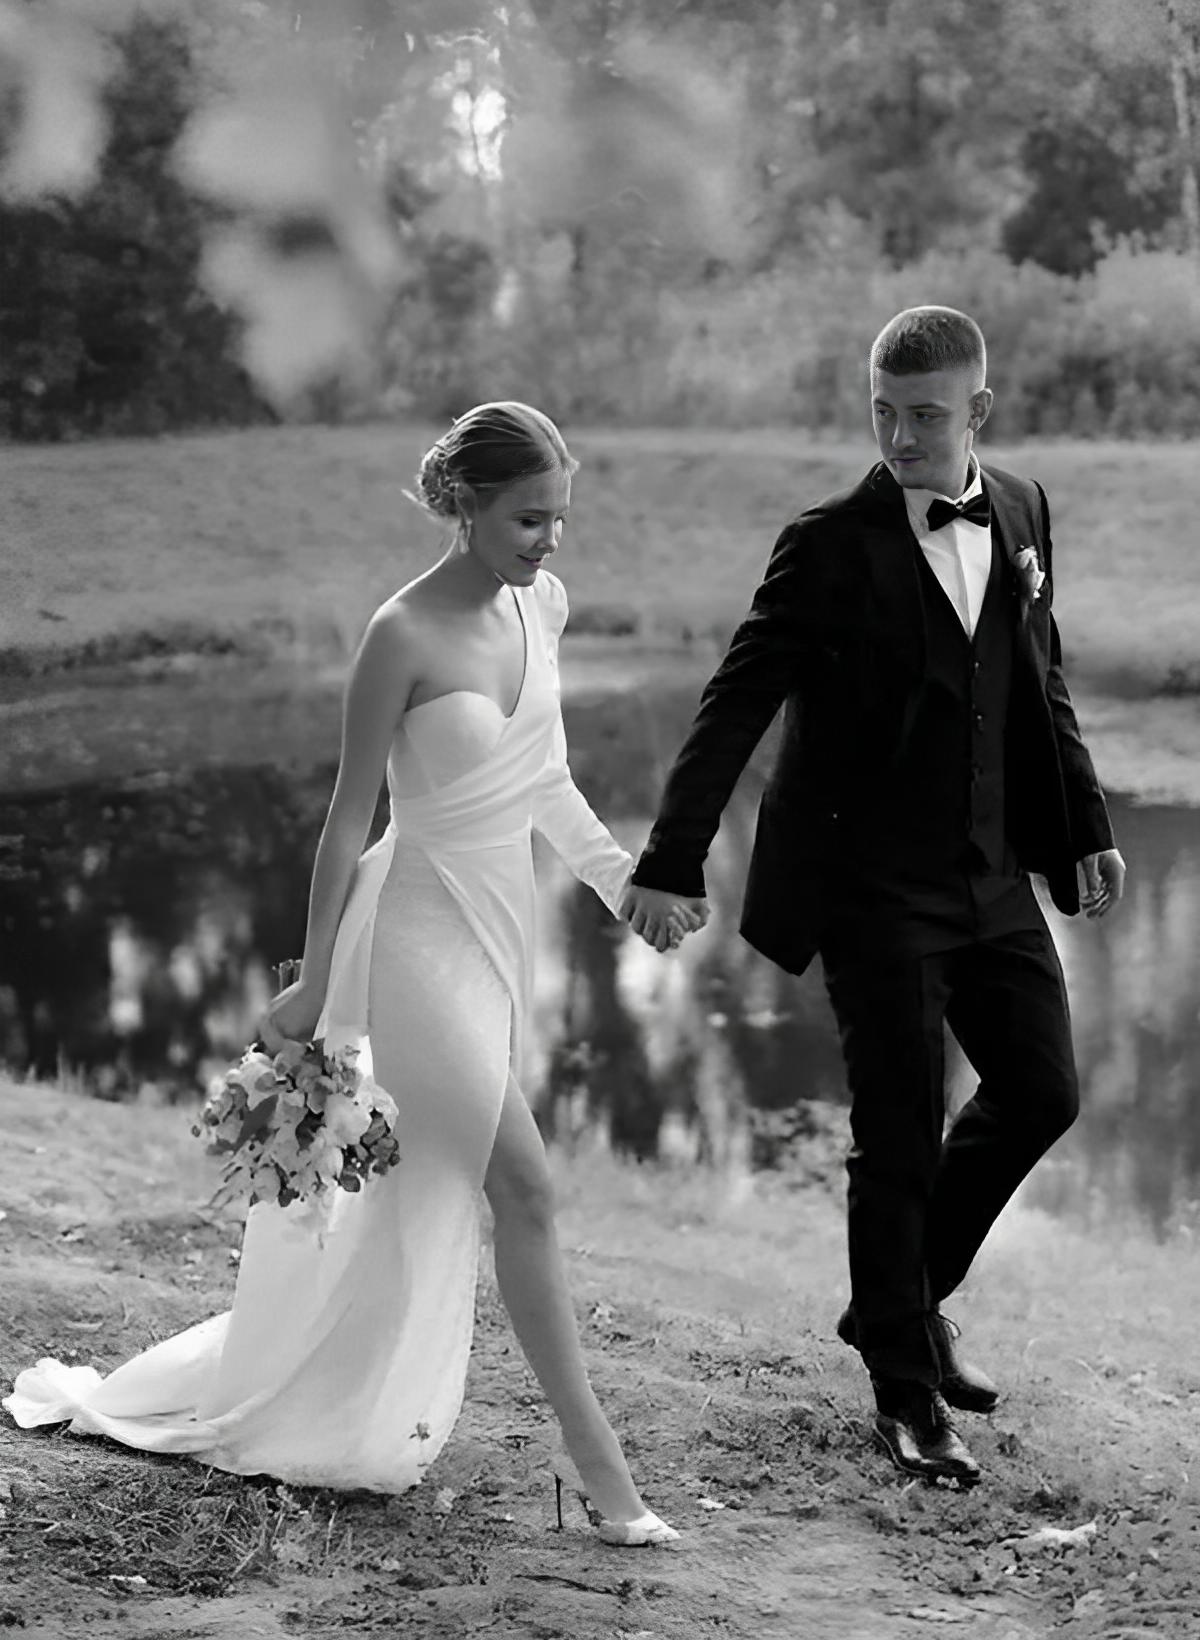 Sheath One-Shoulder Long Sleeves Sweep Train Satin/Sequined Wedding Dresses